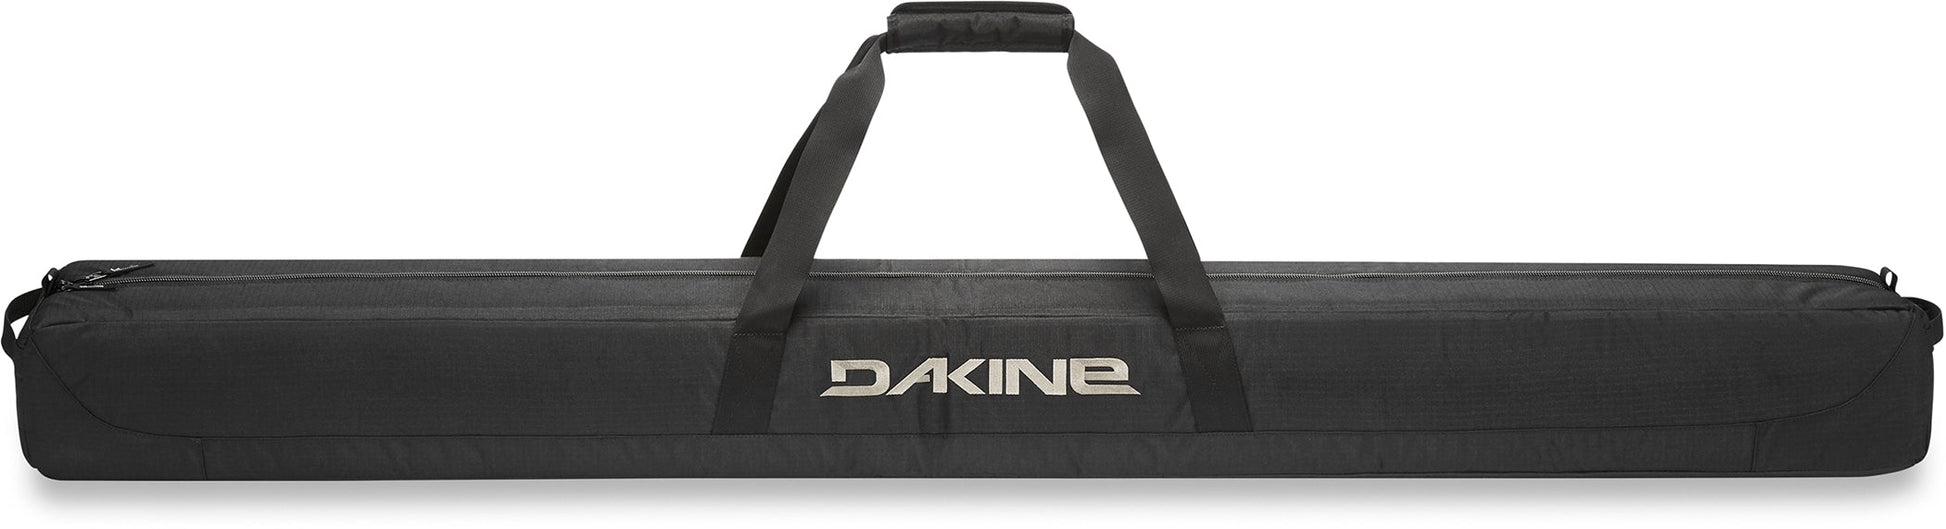 Dakine Padded Ski Sleeve 190 CM - Black